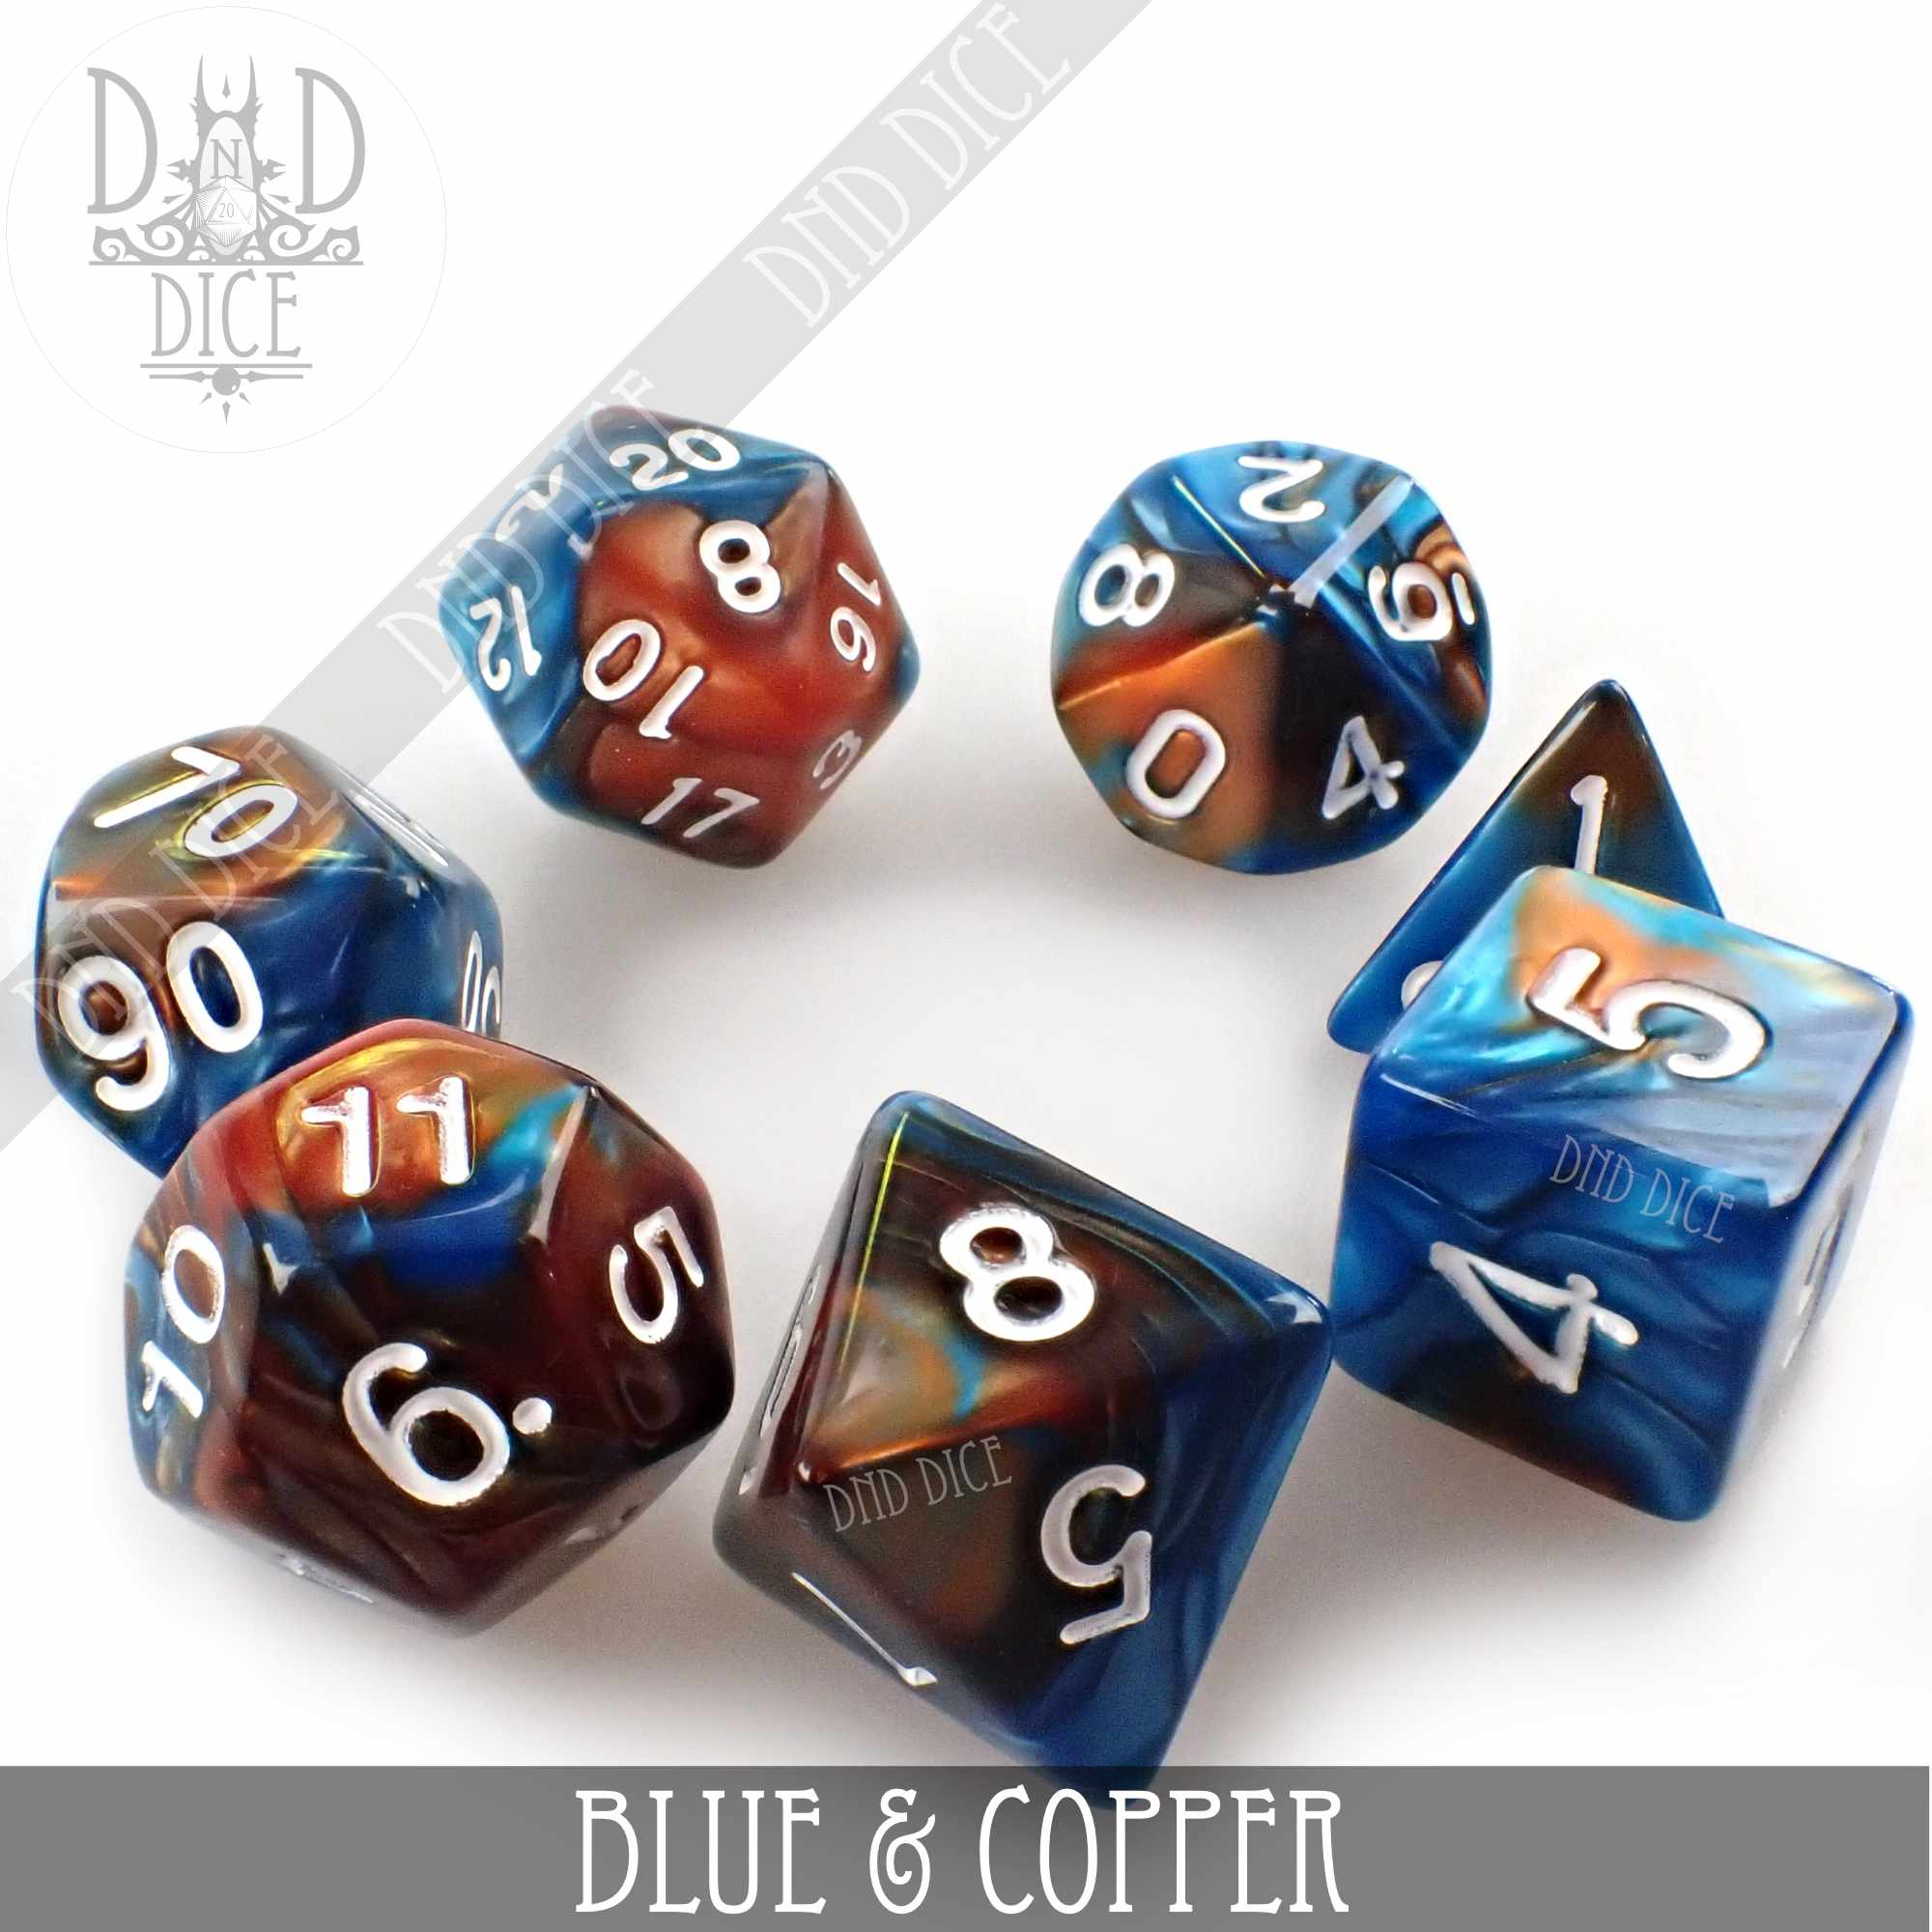 Blue & Copper Dice Set